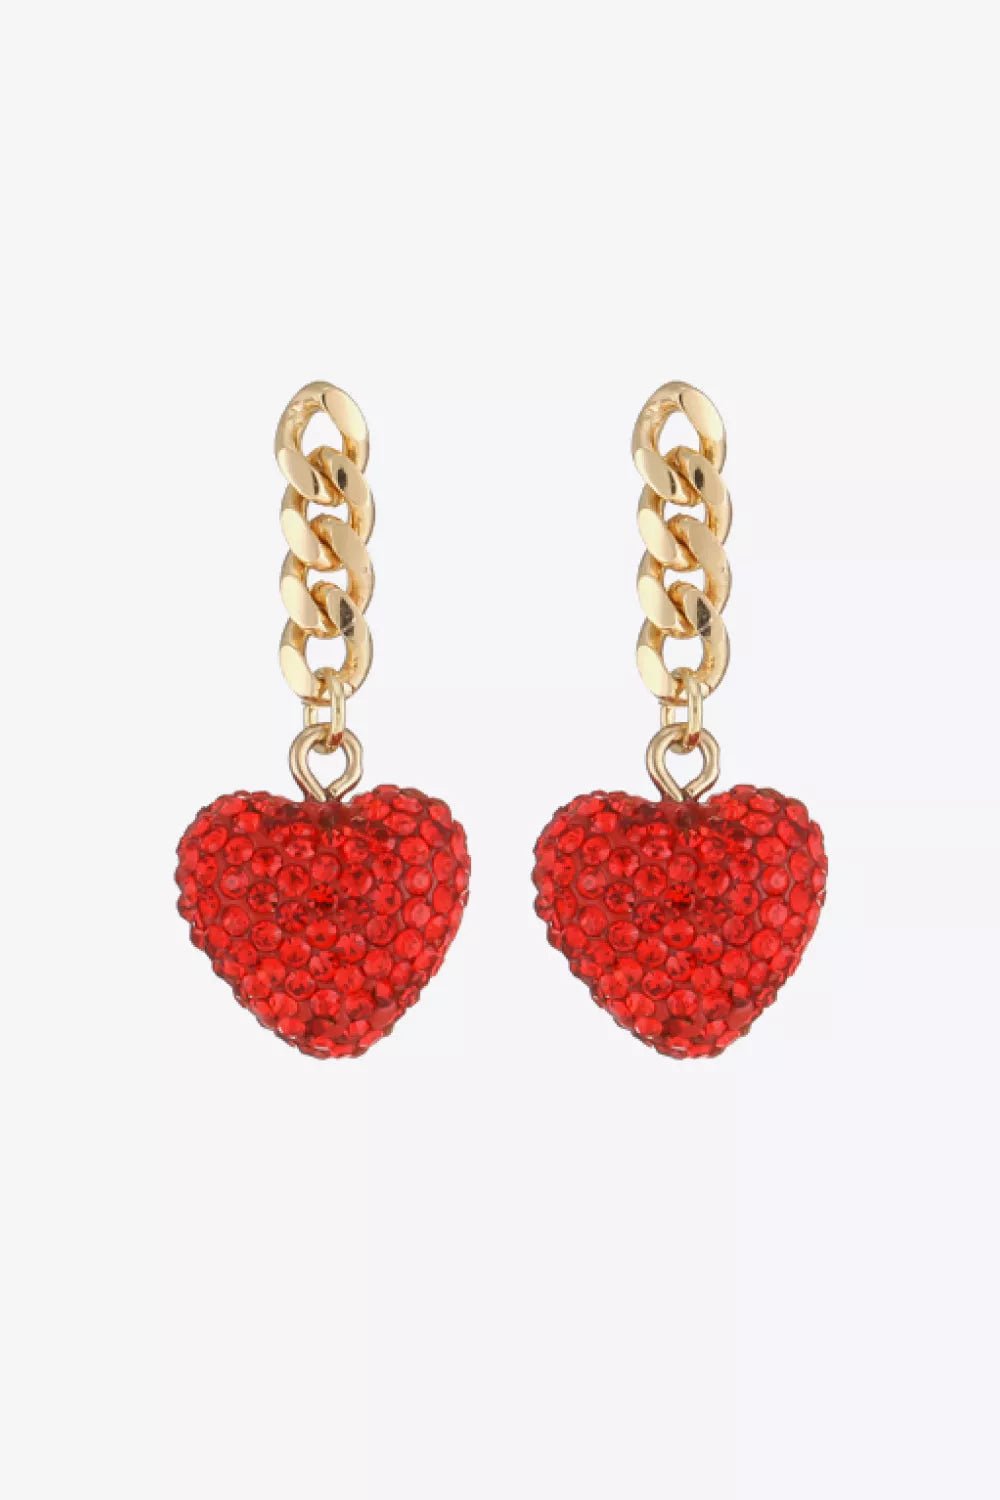 Rhinestone Heart Chain Drop Earrings - London's Closet Boutique